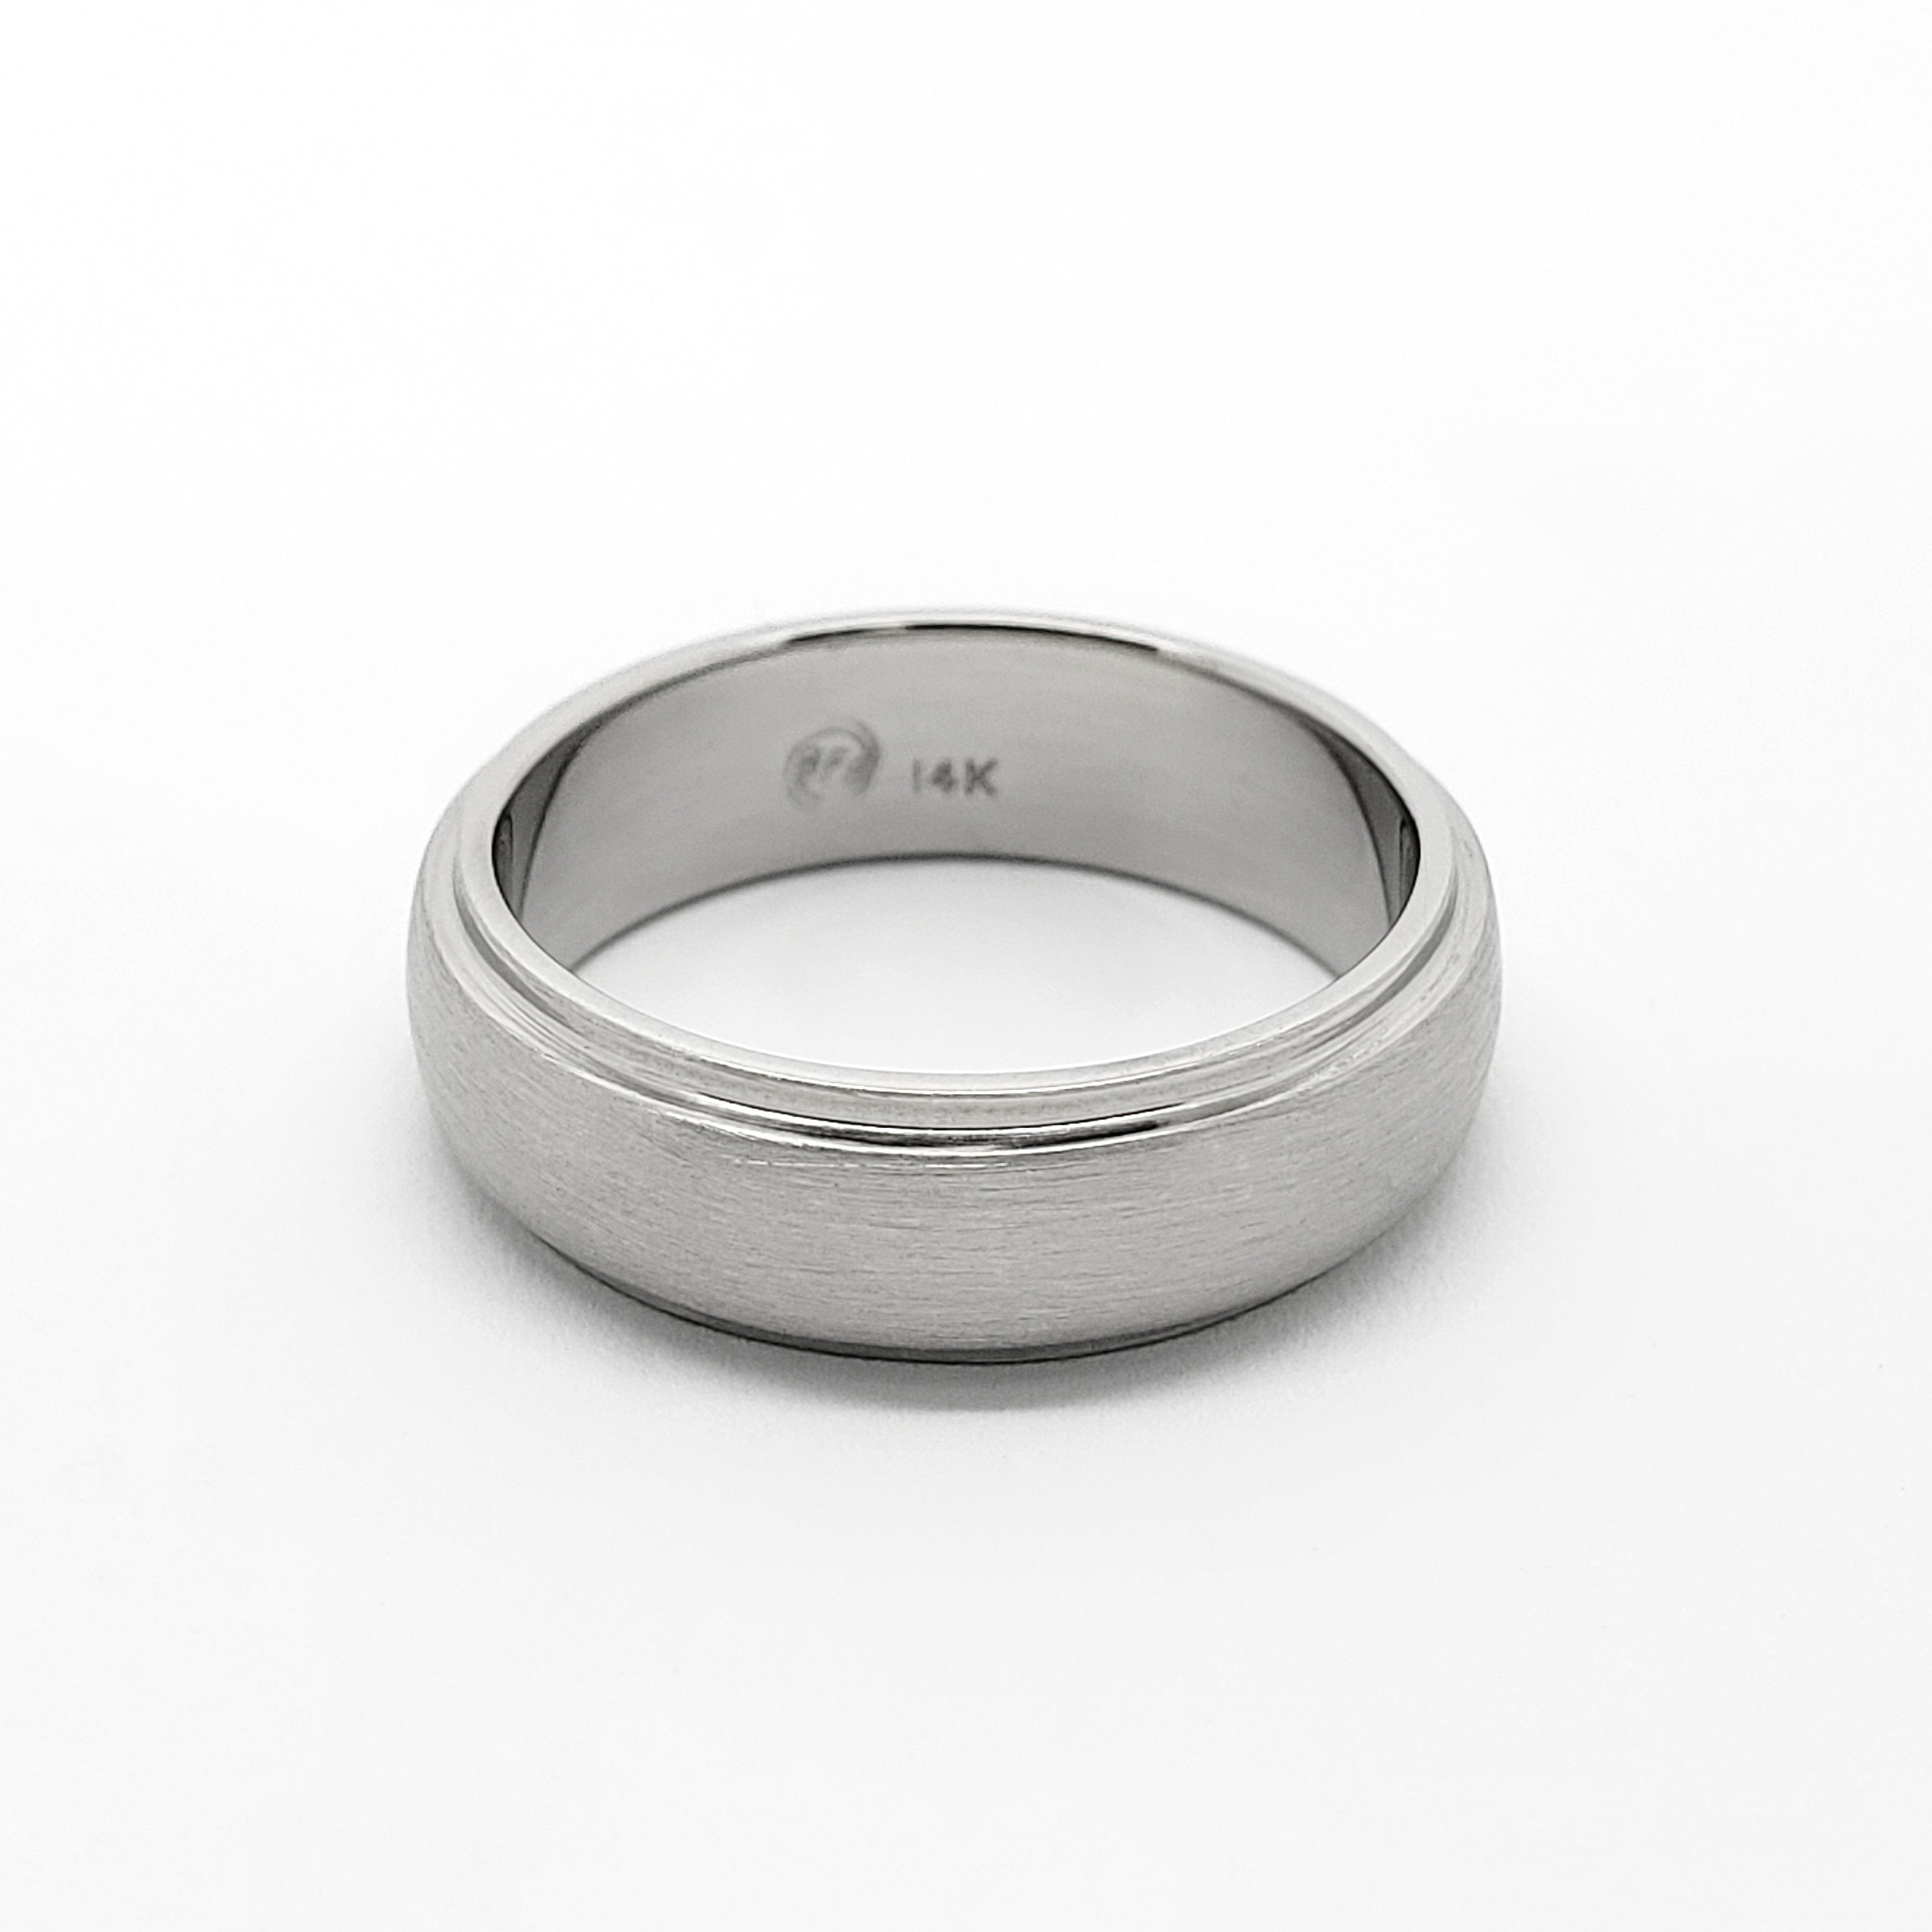 White Gold Wedding Ring | Era Design Vancouver Canada